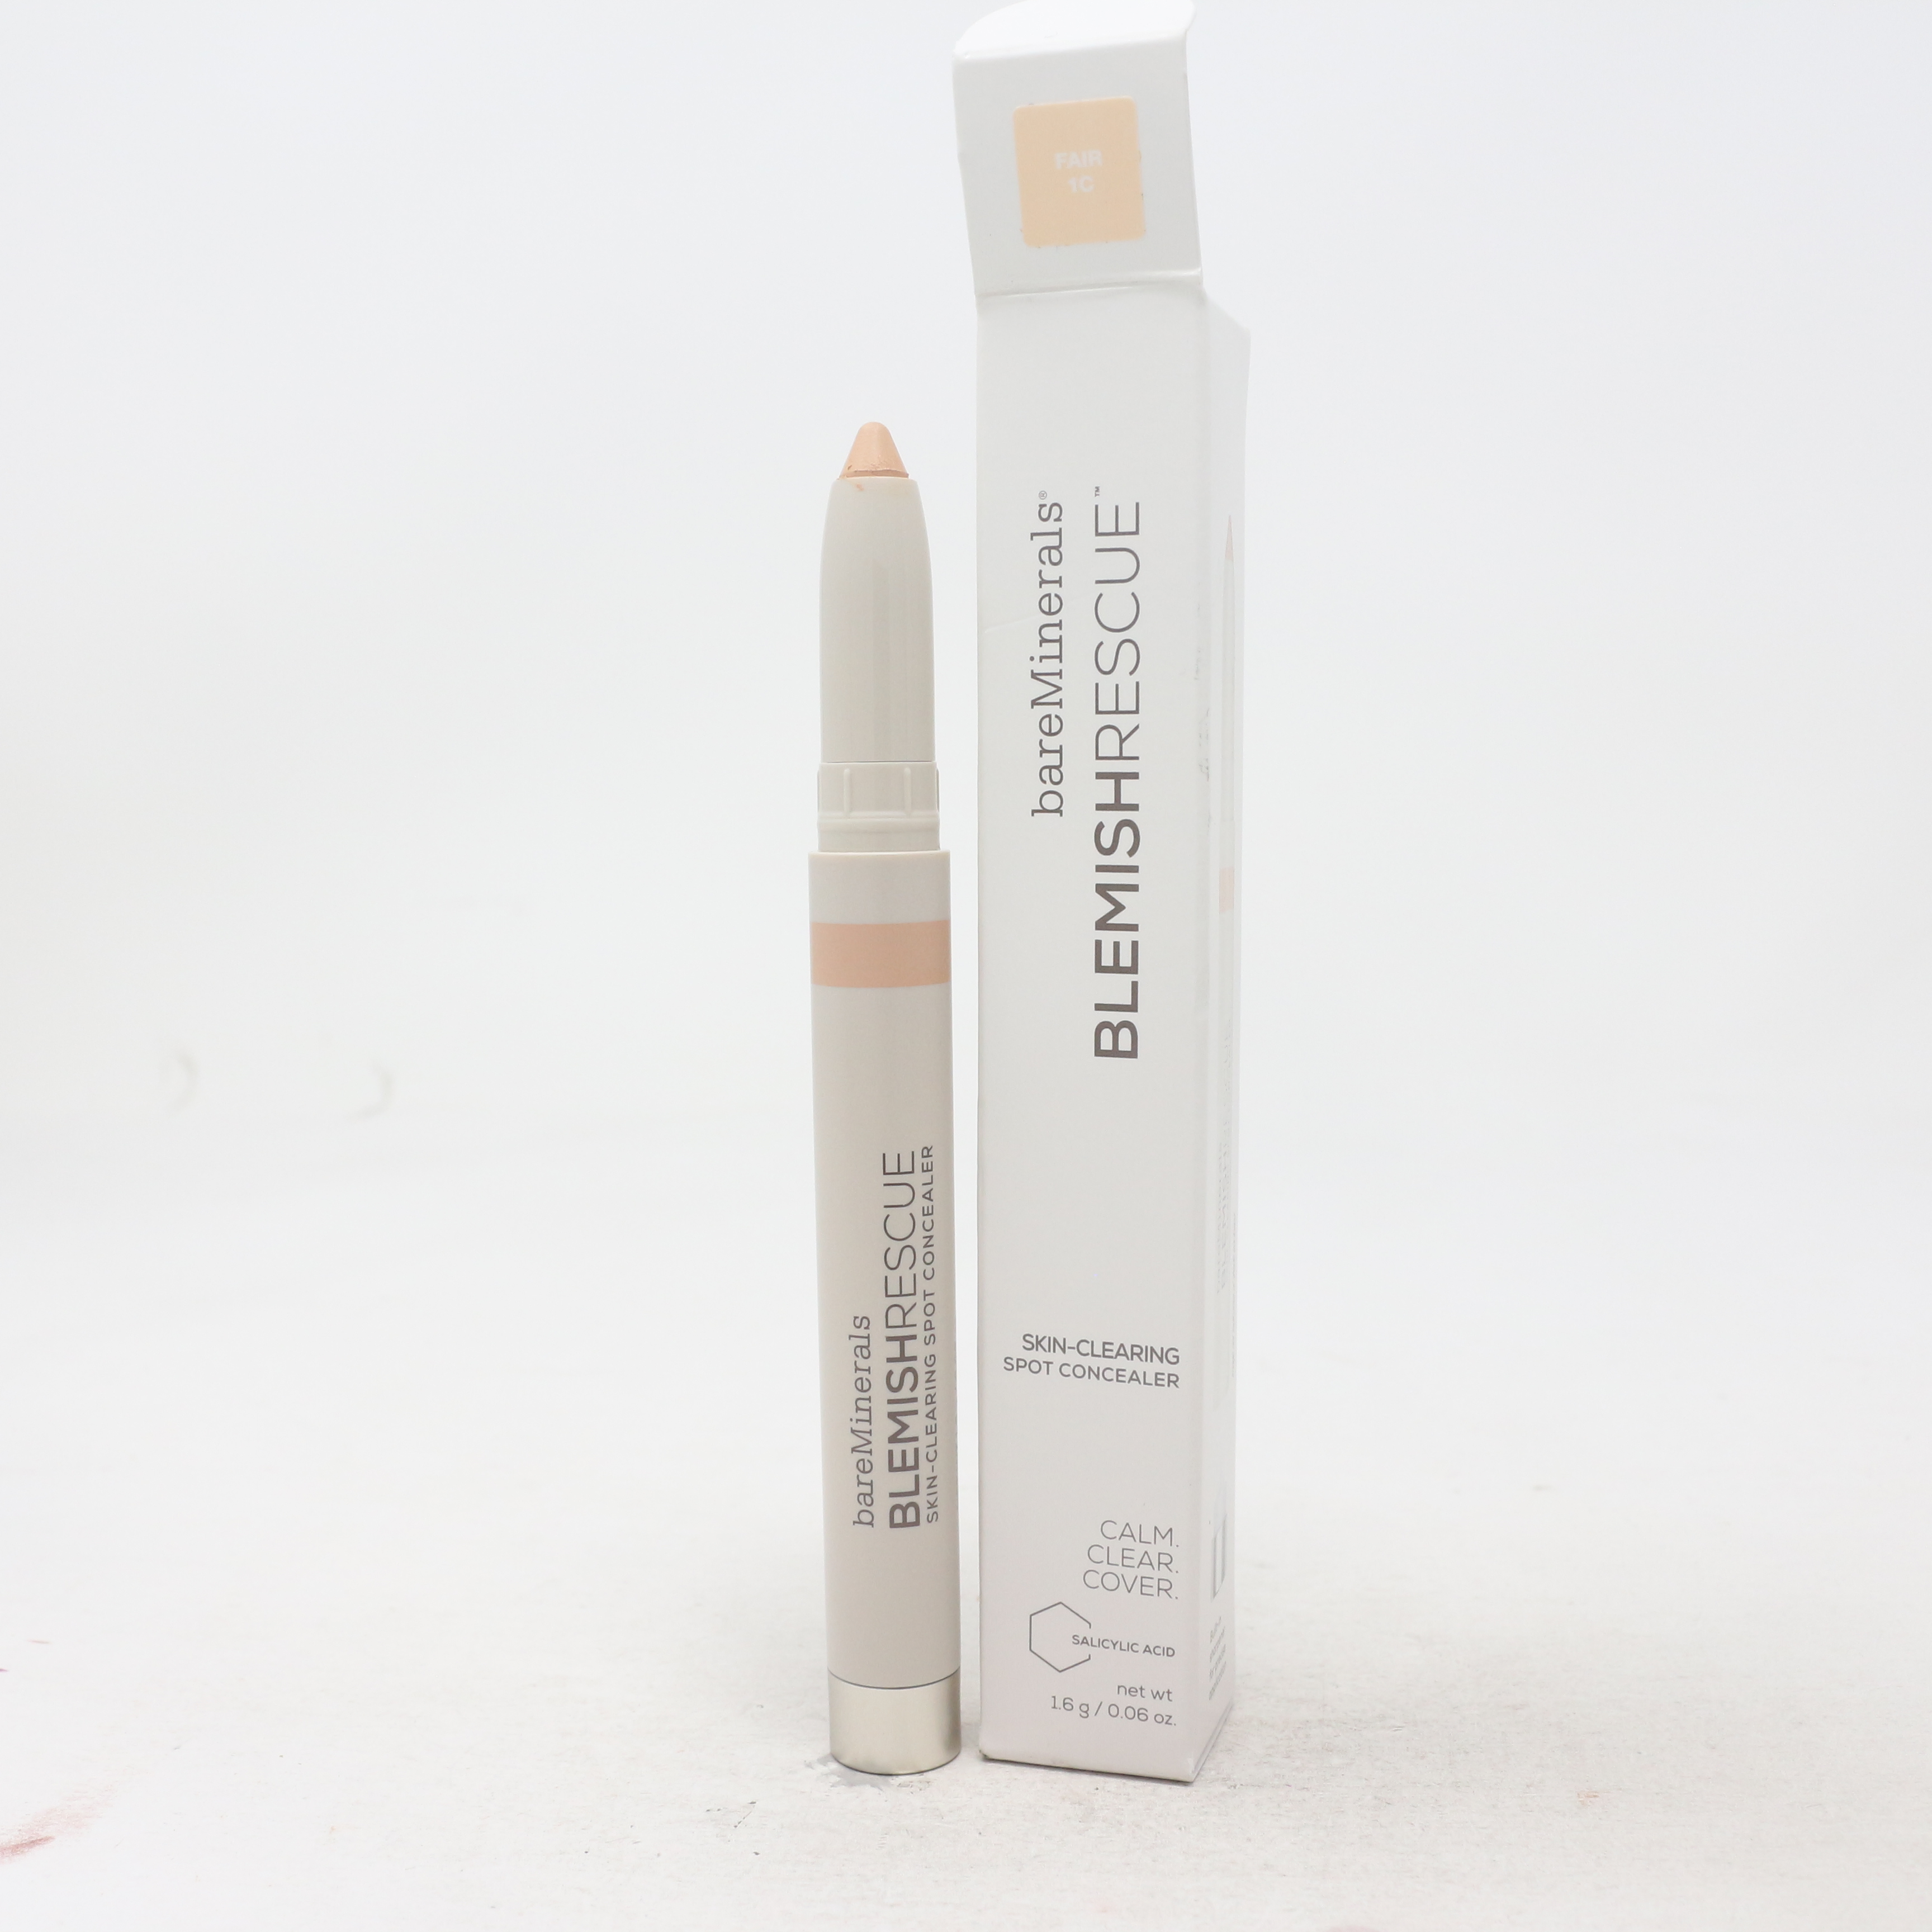 Bareminerals Blemish Skin-Clearing Spot Concealer New Box | eBay